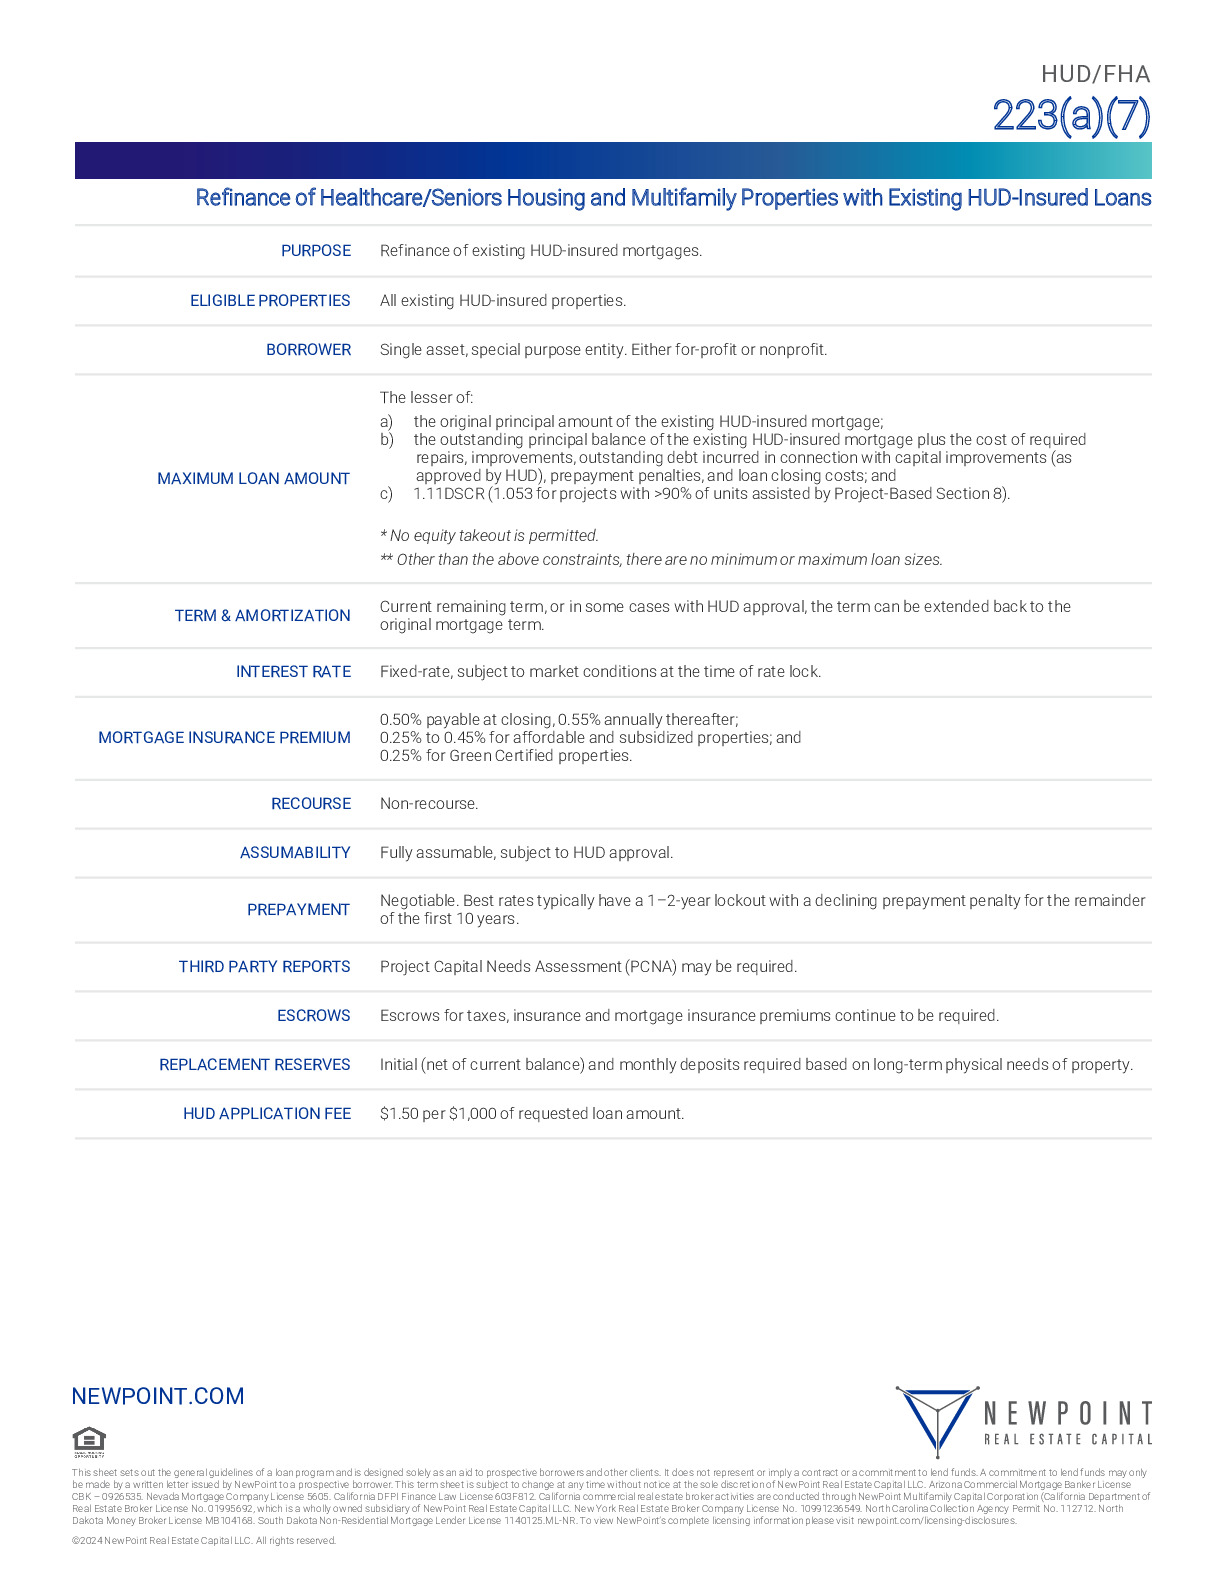 NewPoint_HUD-FHA_223(a)(7).pdf